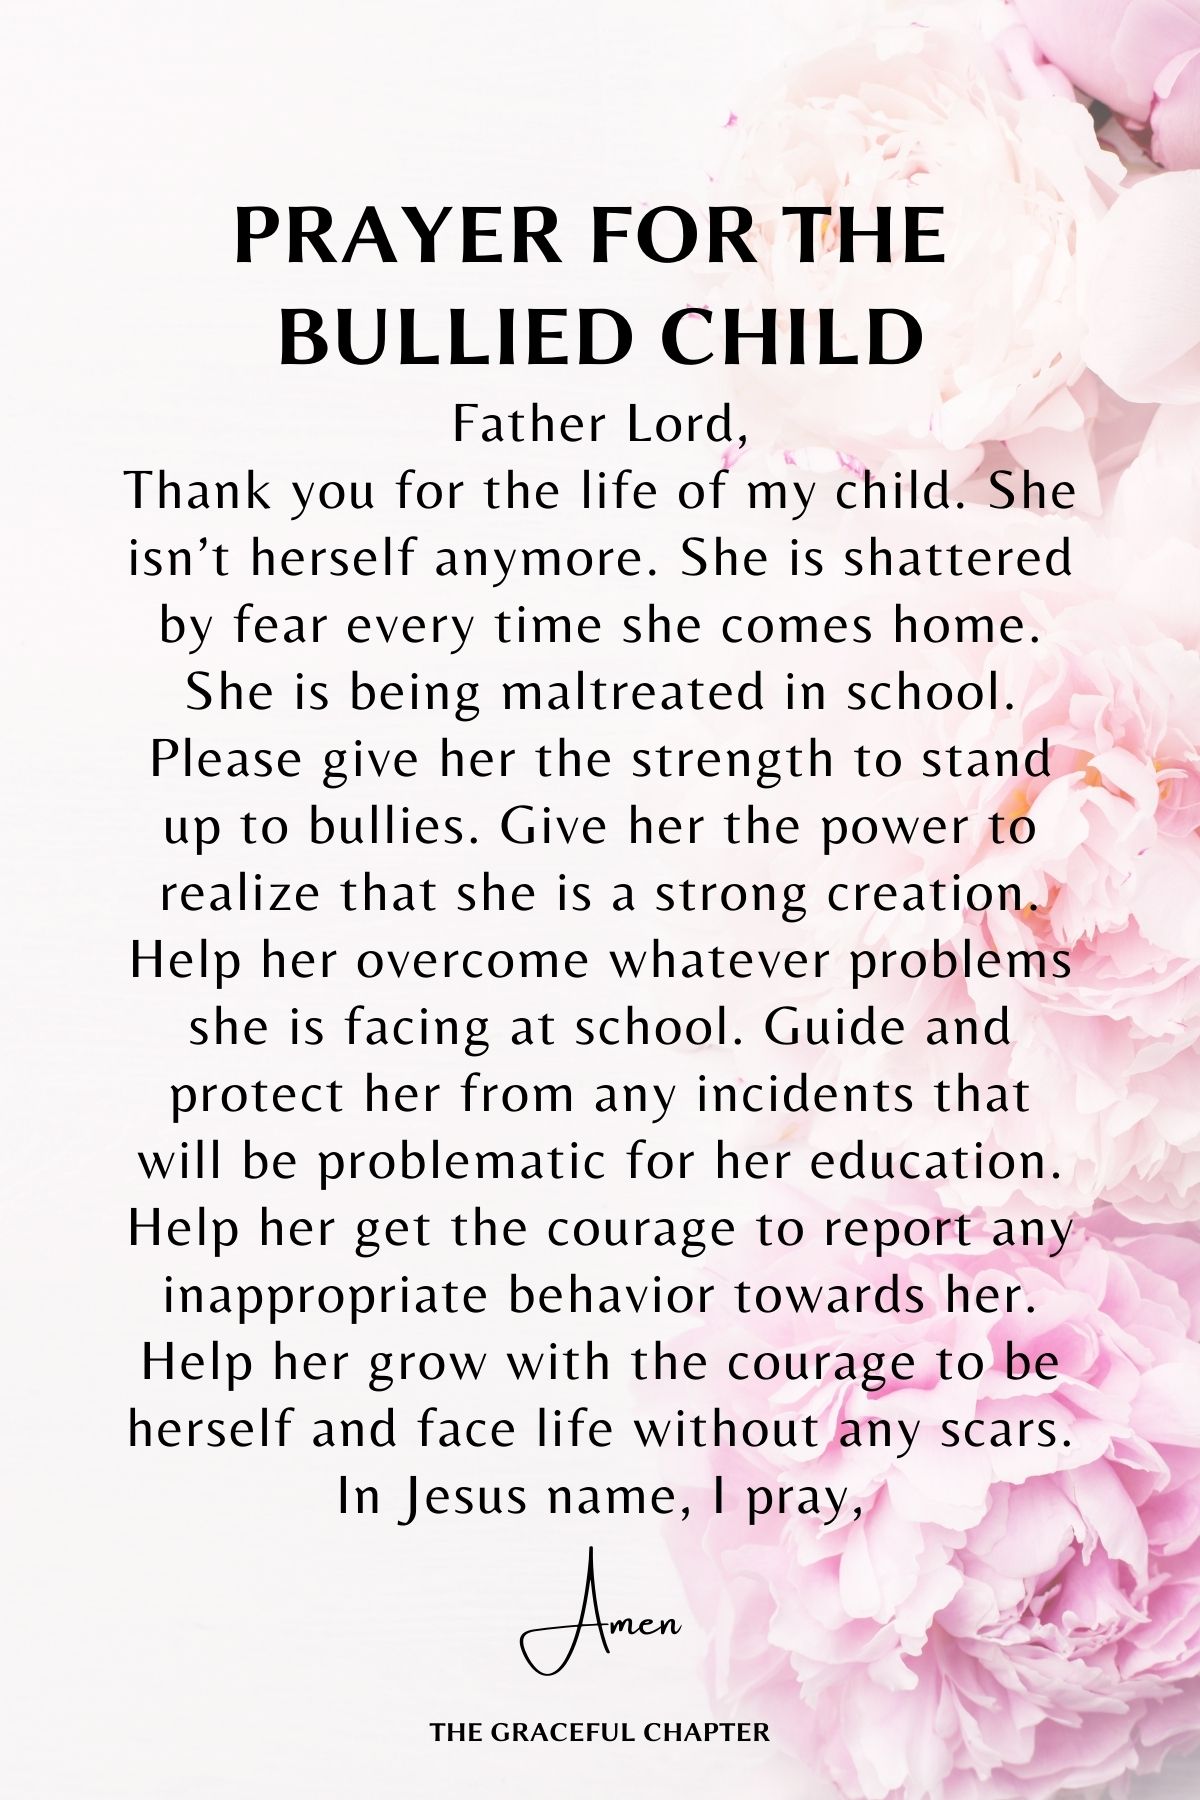 Prayer for the bullied child